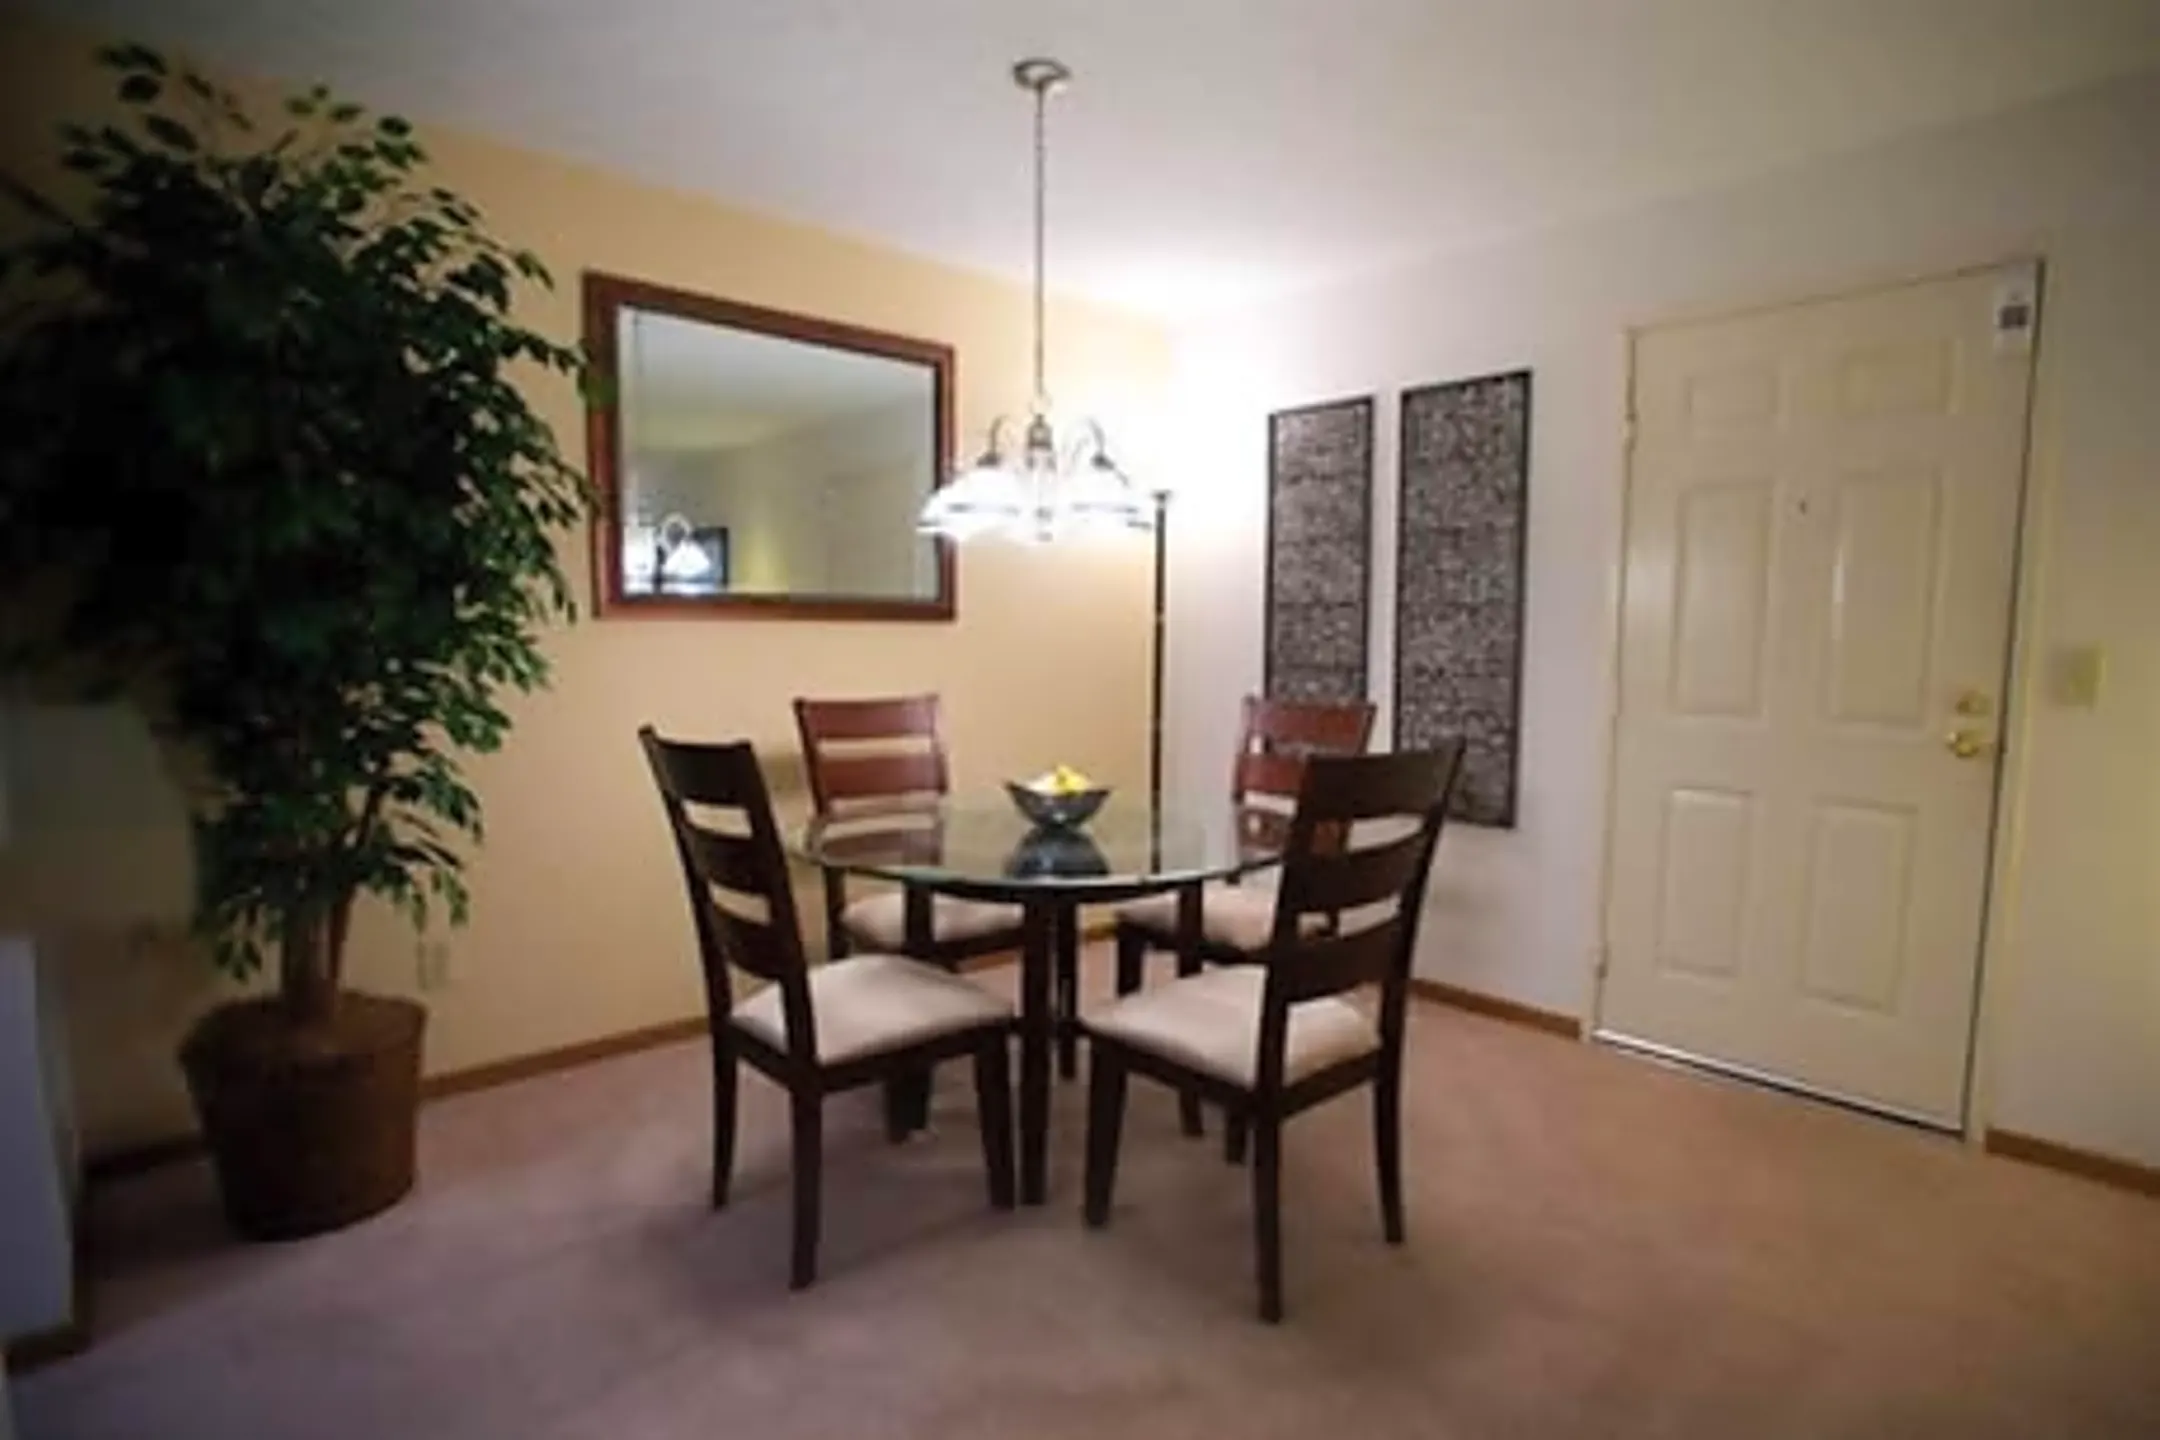 Dining Room - Northwoods Apartments - Cincinnati, OH